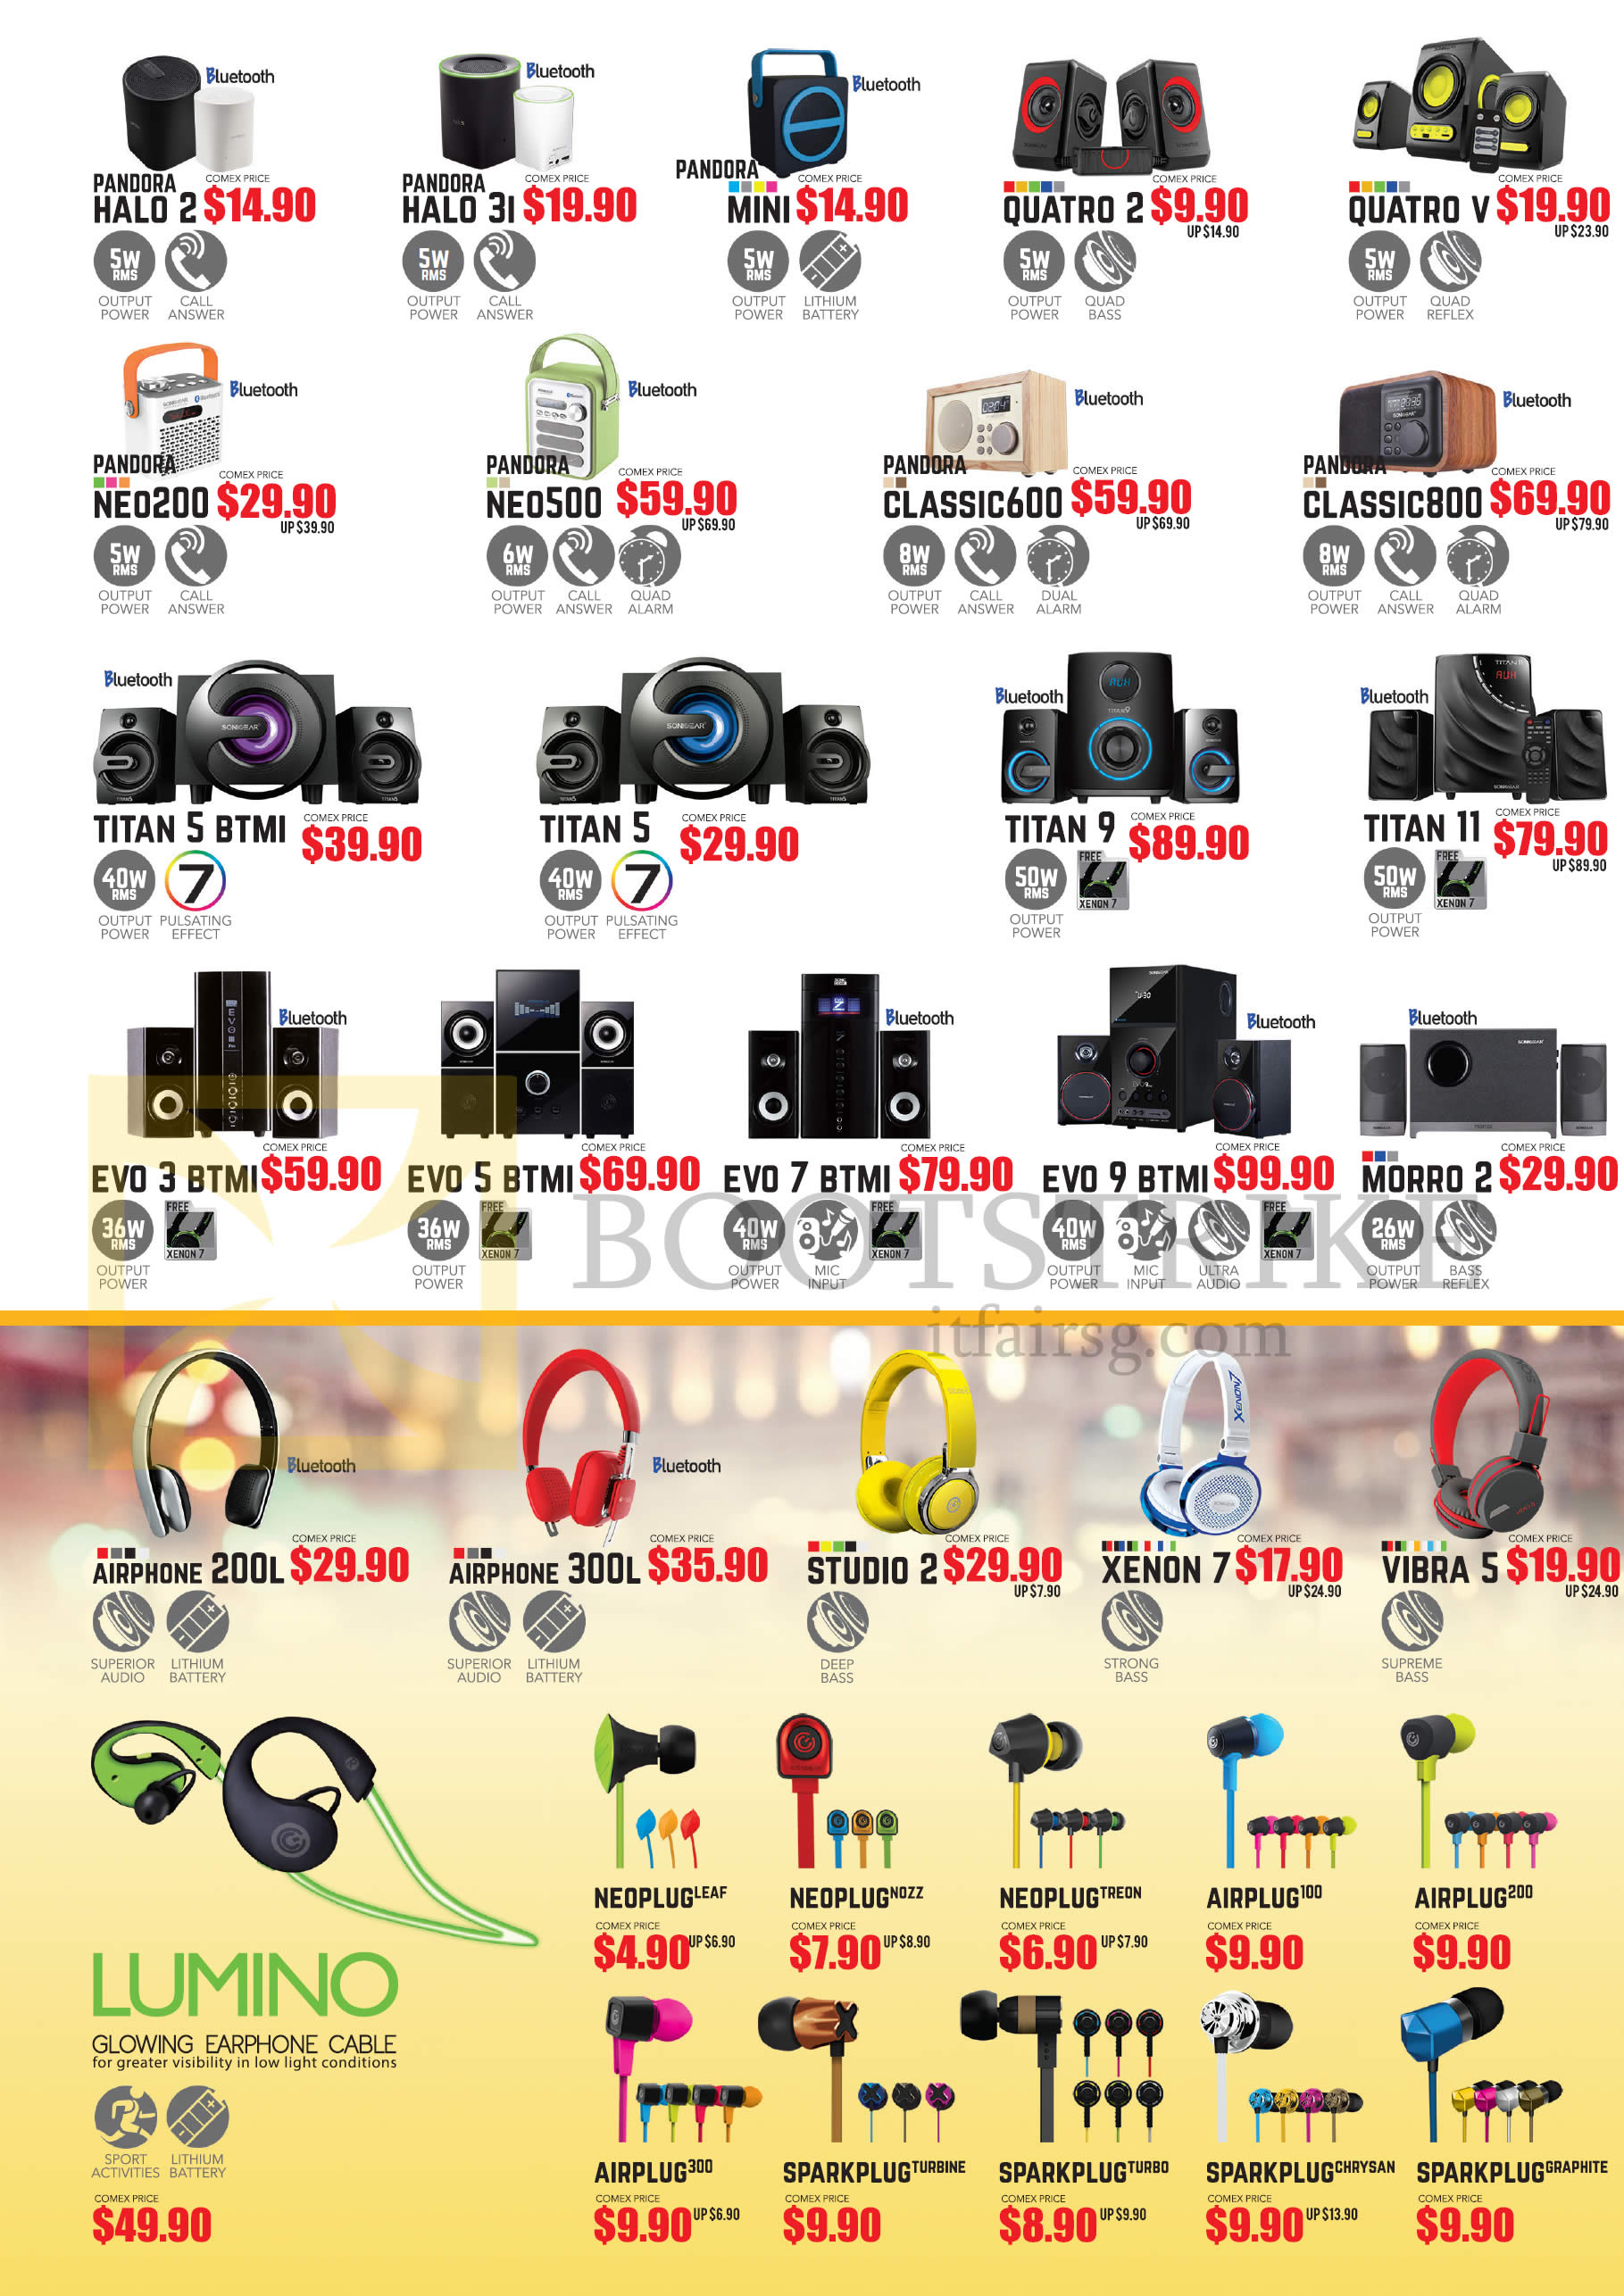 COMEX 2016 price list image brochure of Leapfrog Bluetooth Speakers, Headphones, Earphones, Pandora Halo 2, 3I, Mini, Quatro 2, Neo200, 500, Classic600, Titan 5 BTMI, 5, 9, EVO 3 BTMI, Airphone 200L, 300L